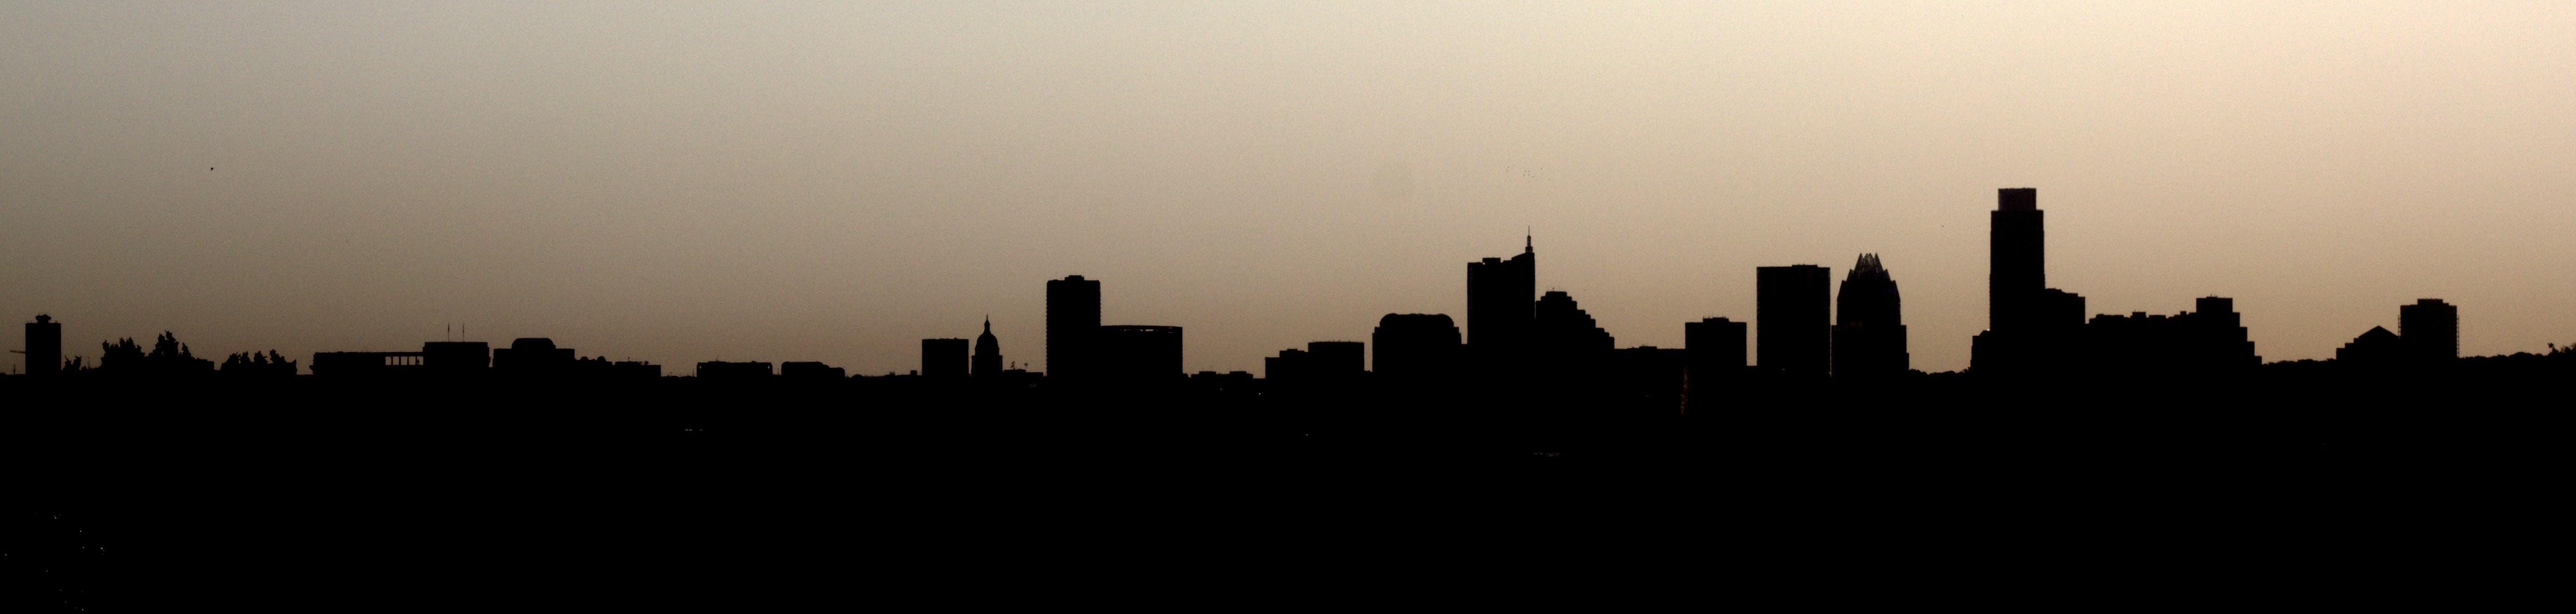 pic] Austin skyline silhouette : pics